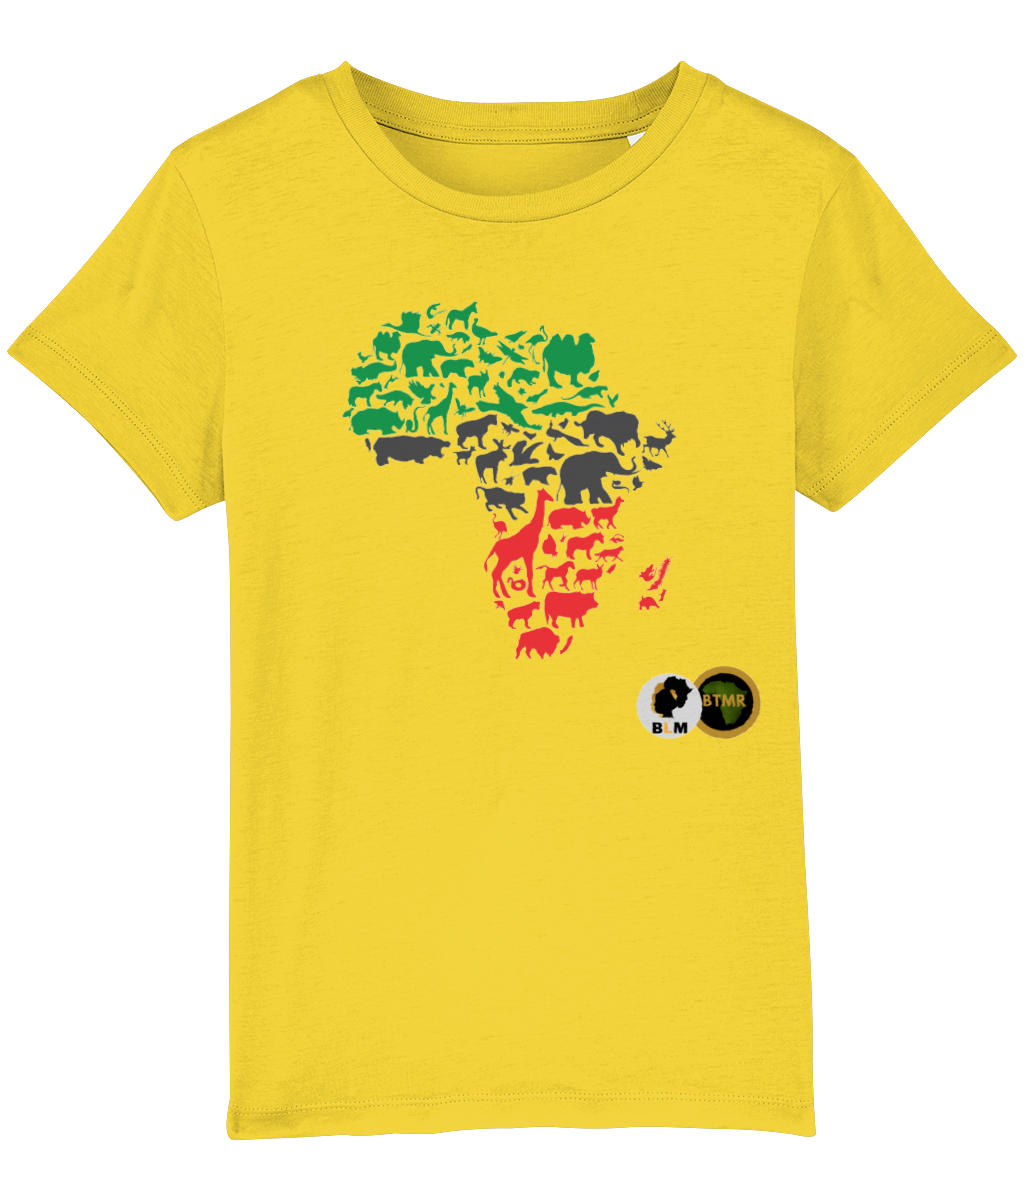 BTMR Animal Africa Unisex Kids T Shirt